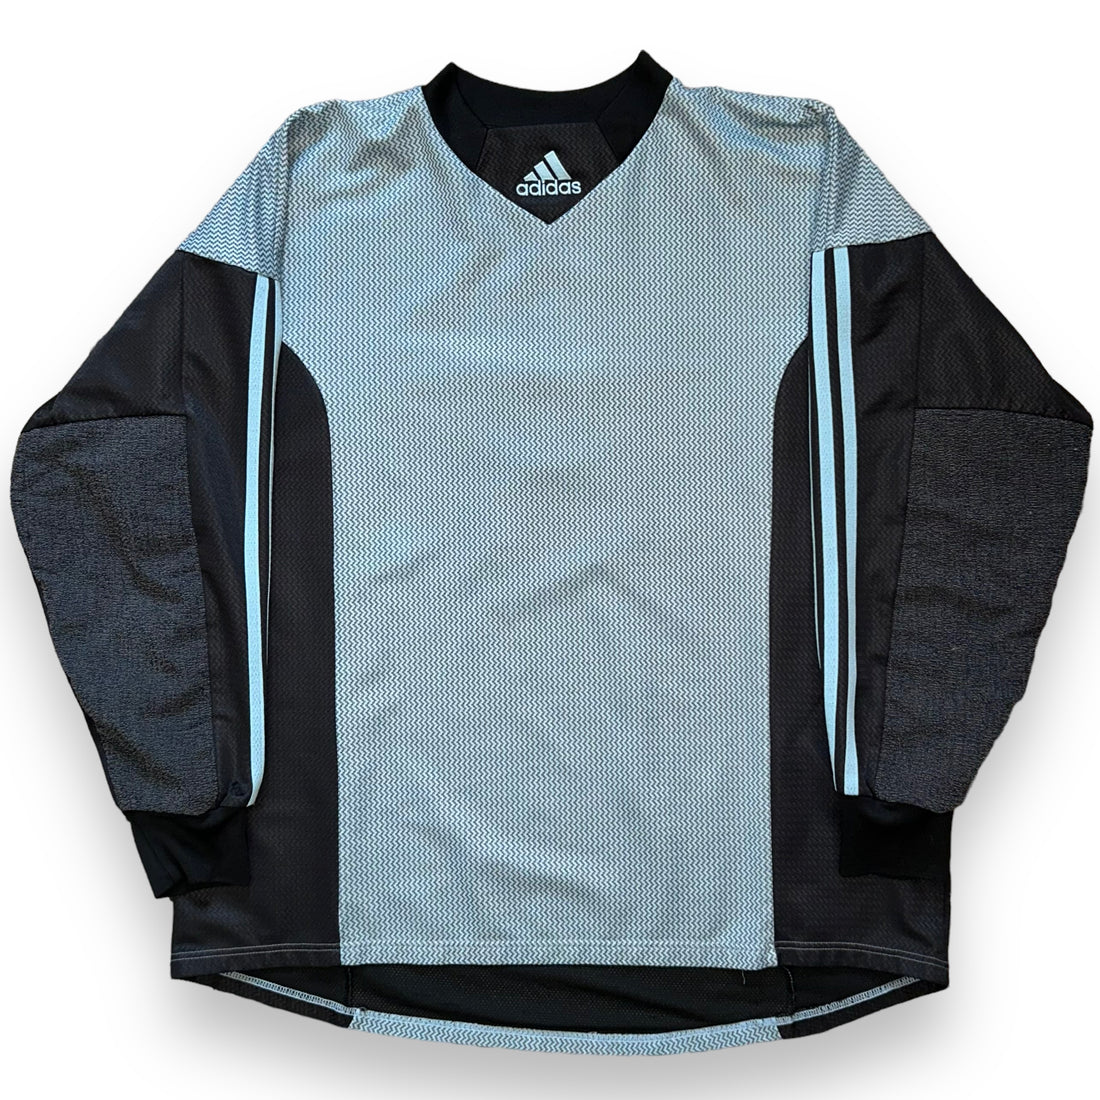 Adidas Vintage Football Jersey (L/XL)